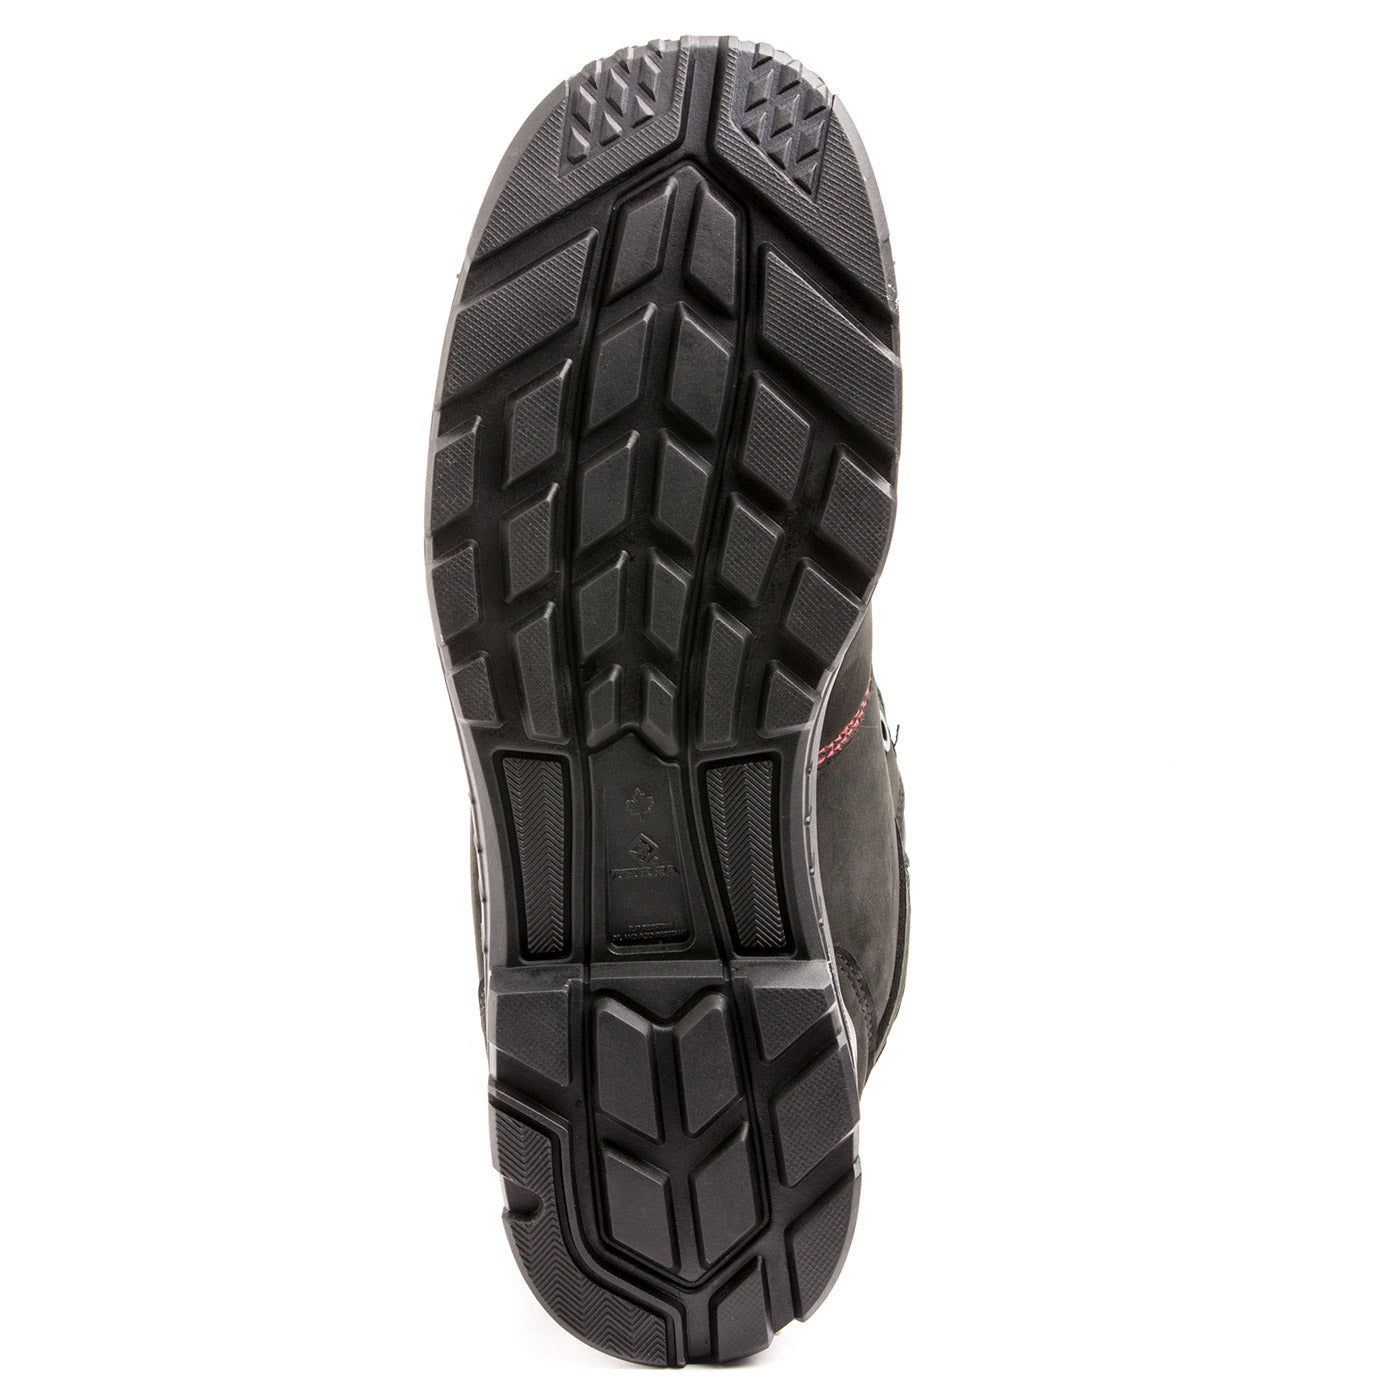 Terra Barricade Composite Toe 8" External Metguard Men's Safety Work Boots | Black | Sizes 7 - 14 Work Boots - Cleanflow